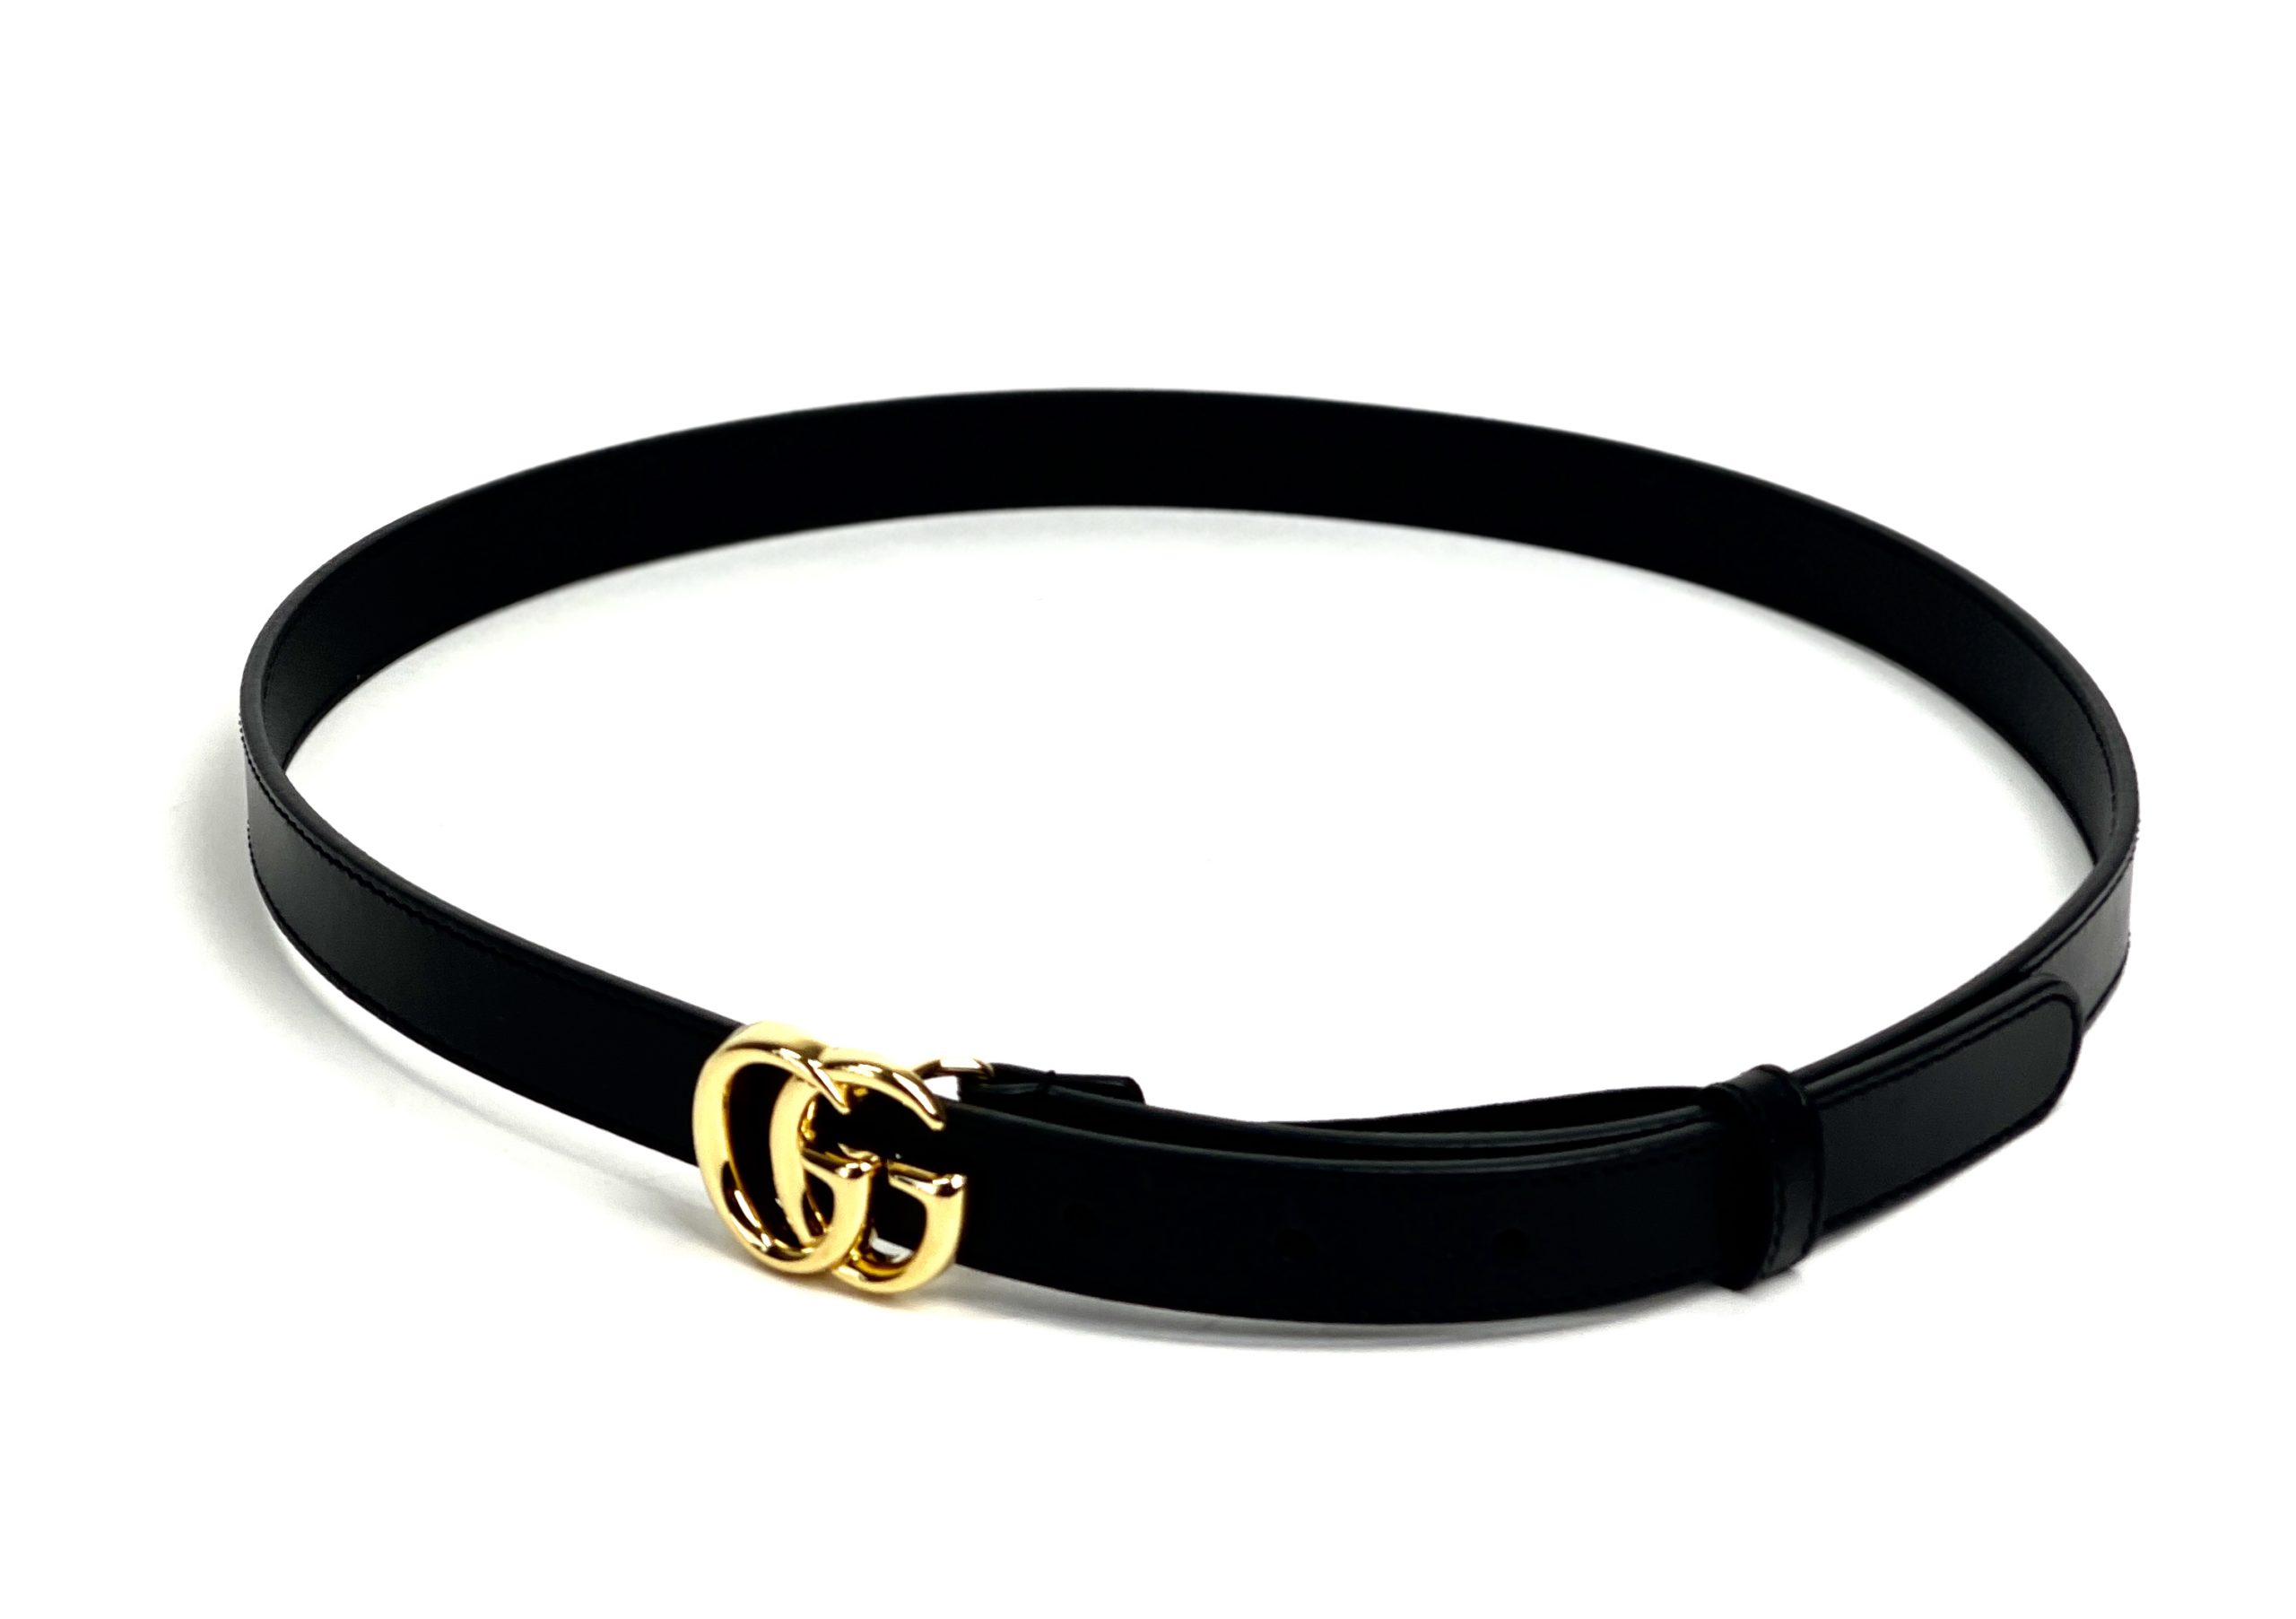 Gucci GG Marmont Thin Belt GG Supreme Beige/Ebony